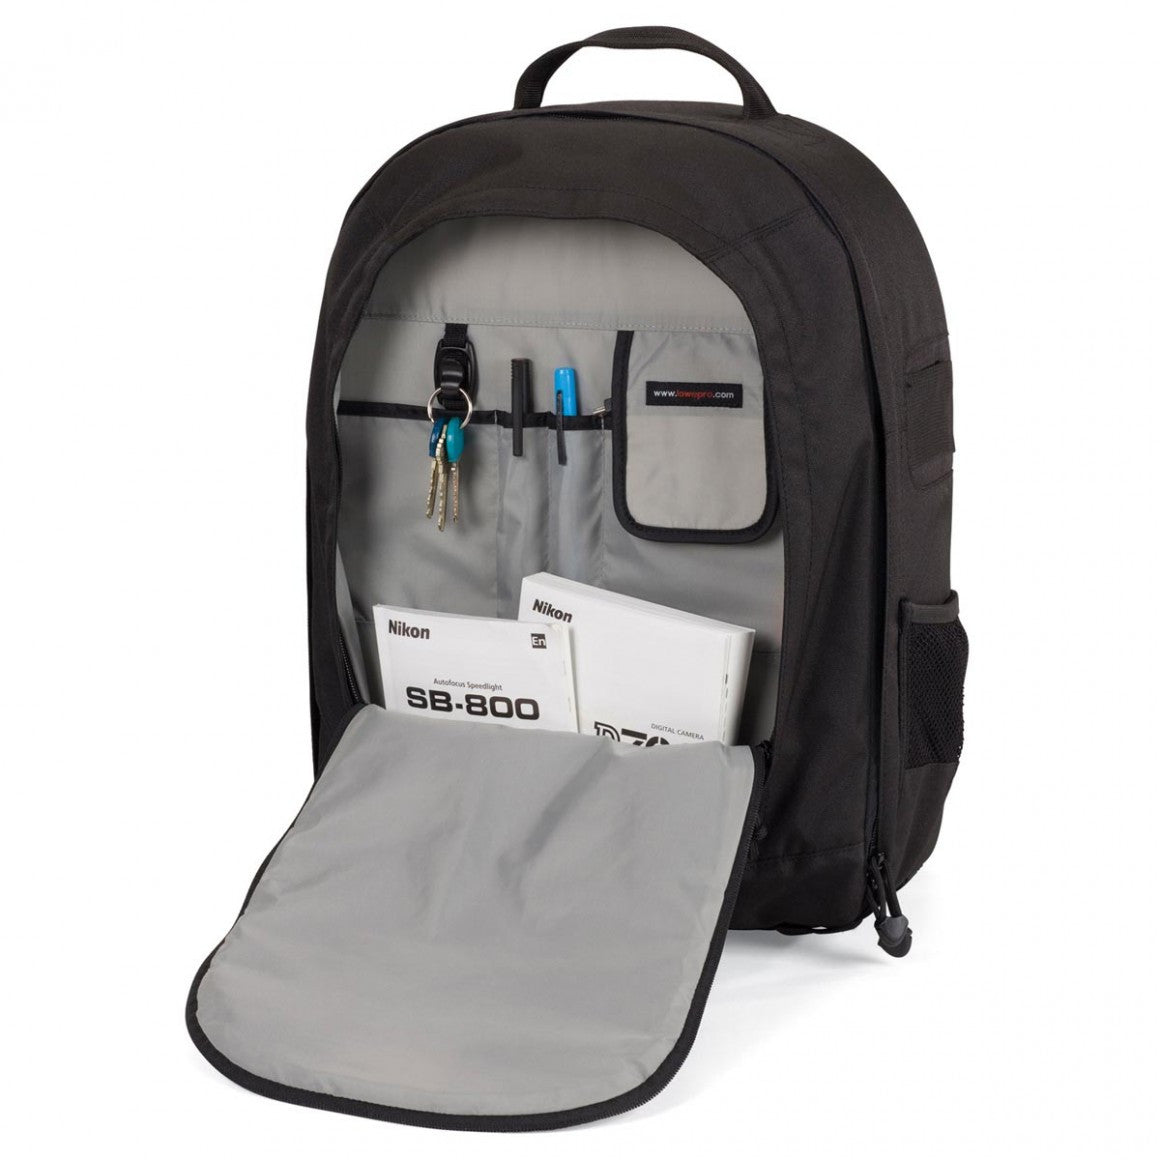 Lowepro Pro Runner 300 AW Camera Backpack (Black), bags backpacks, Lowepro - Pictureline  - 5